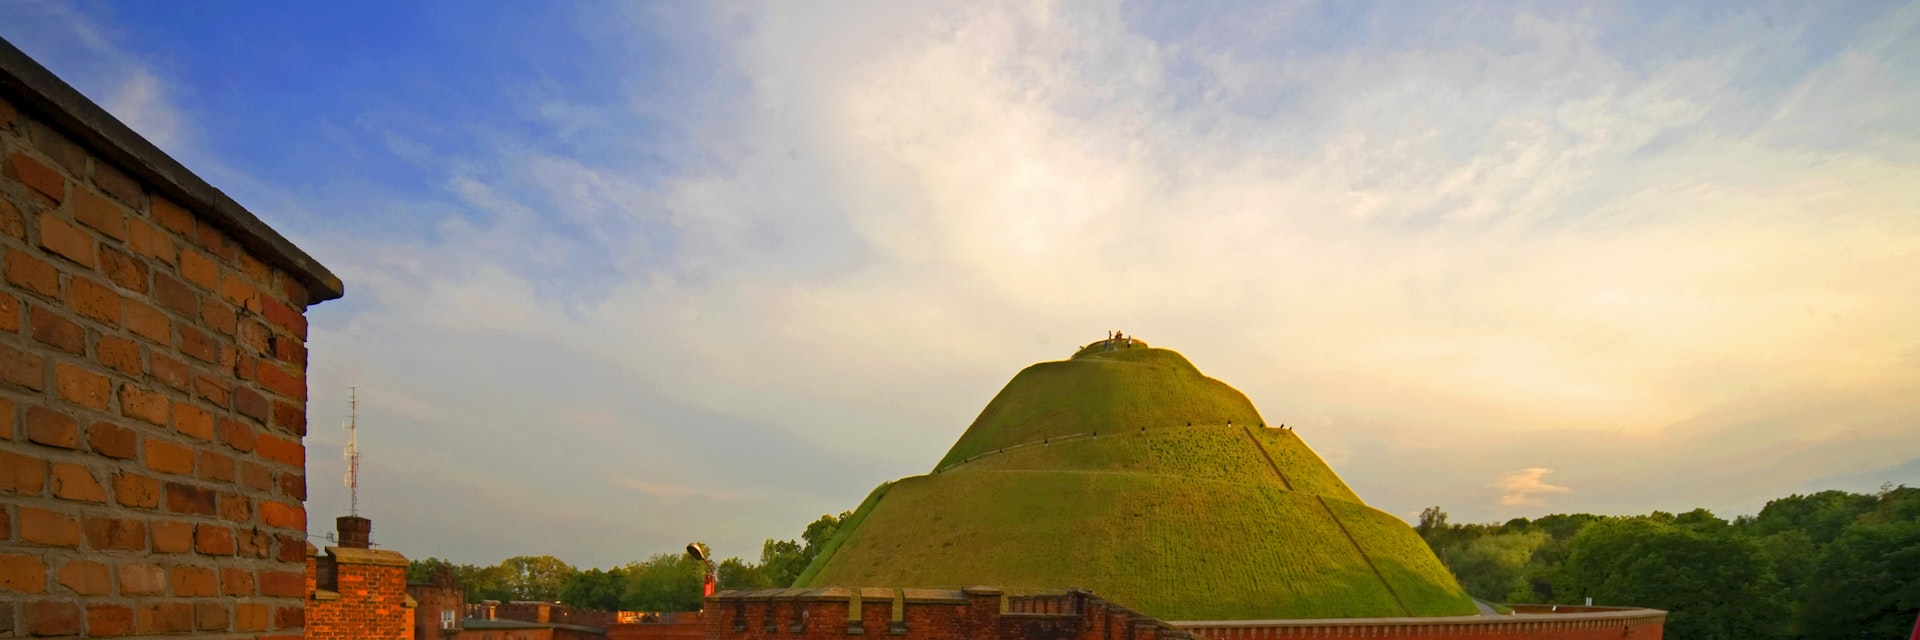 Kosciuszko Mound Hill and fortification, Krakow, Poland